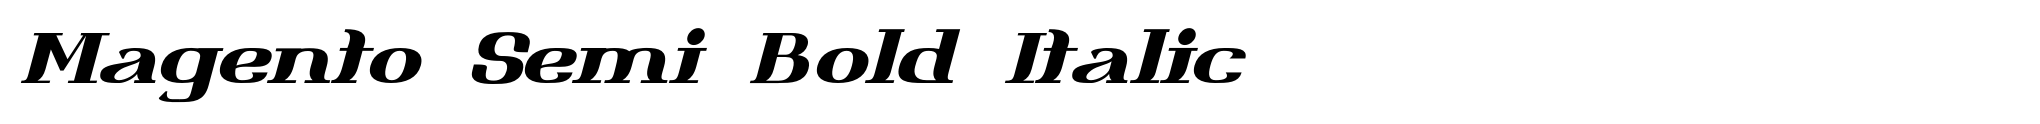 Magento Semi Bold Italic image